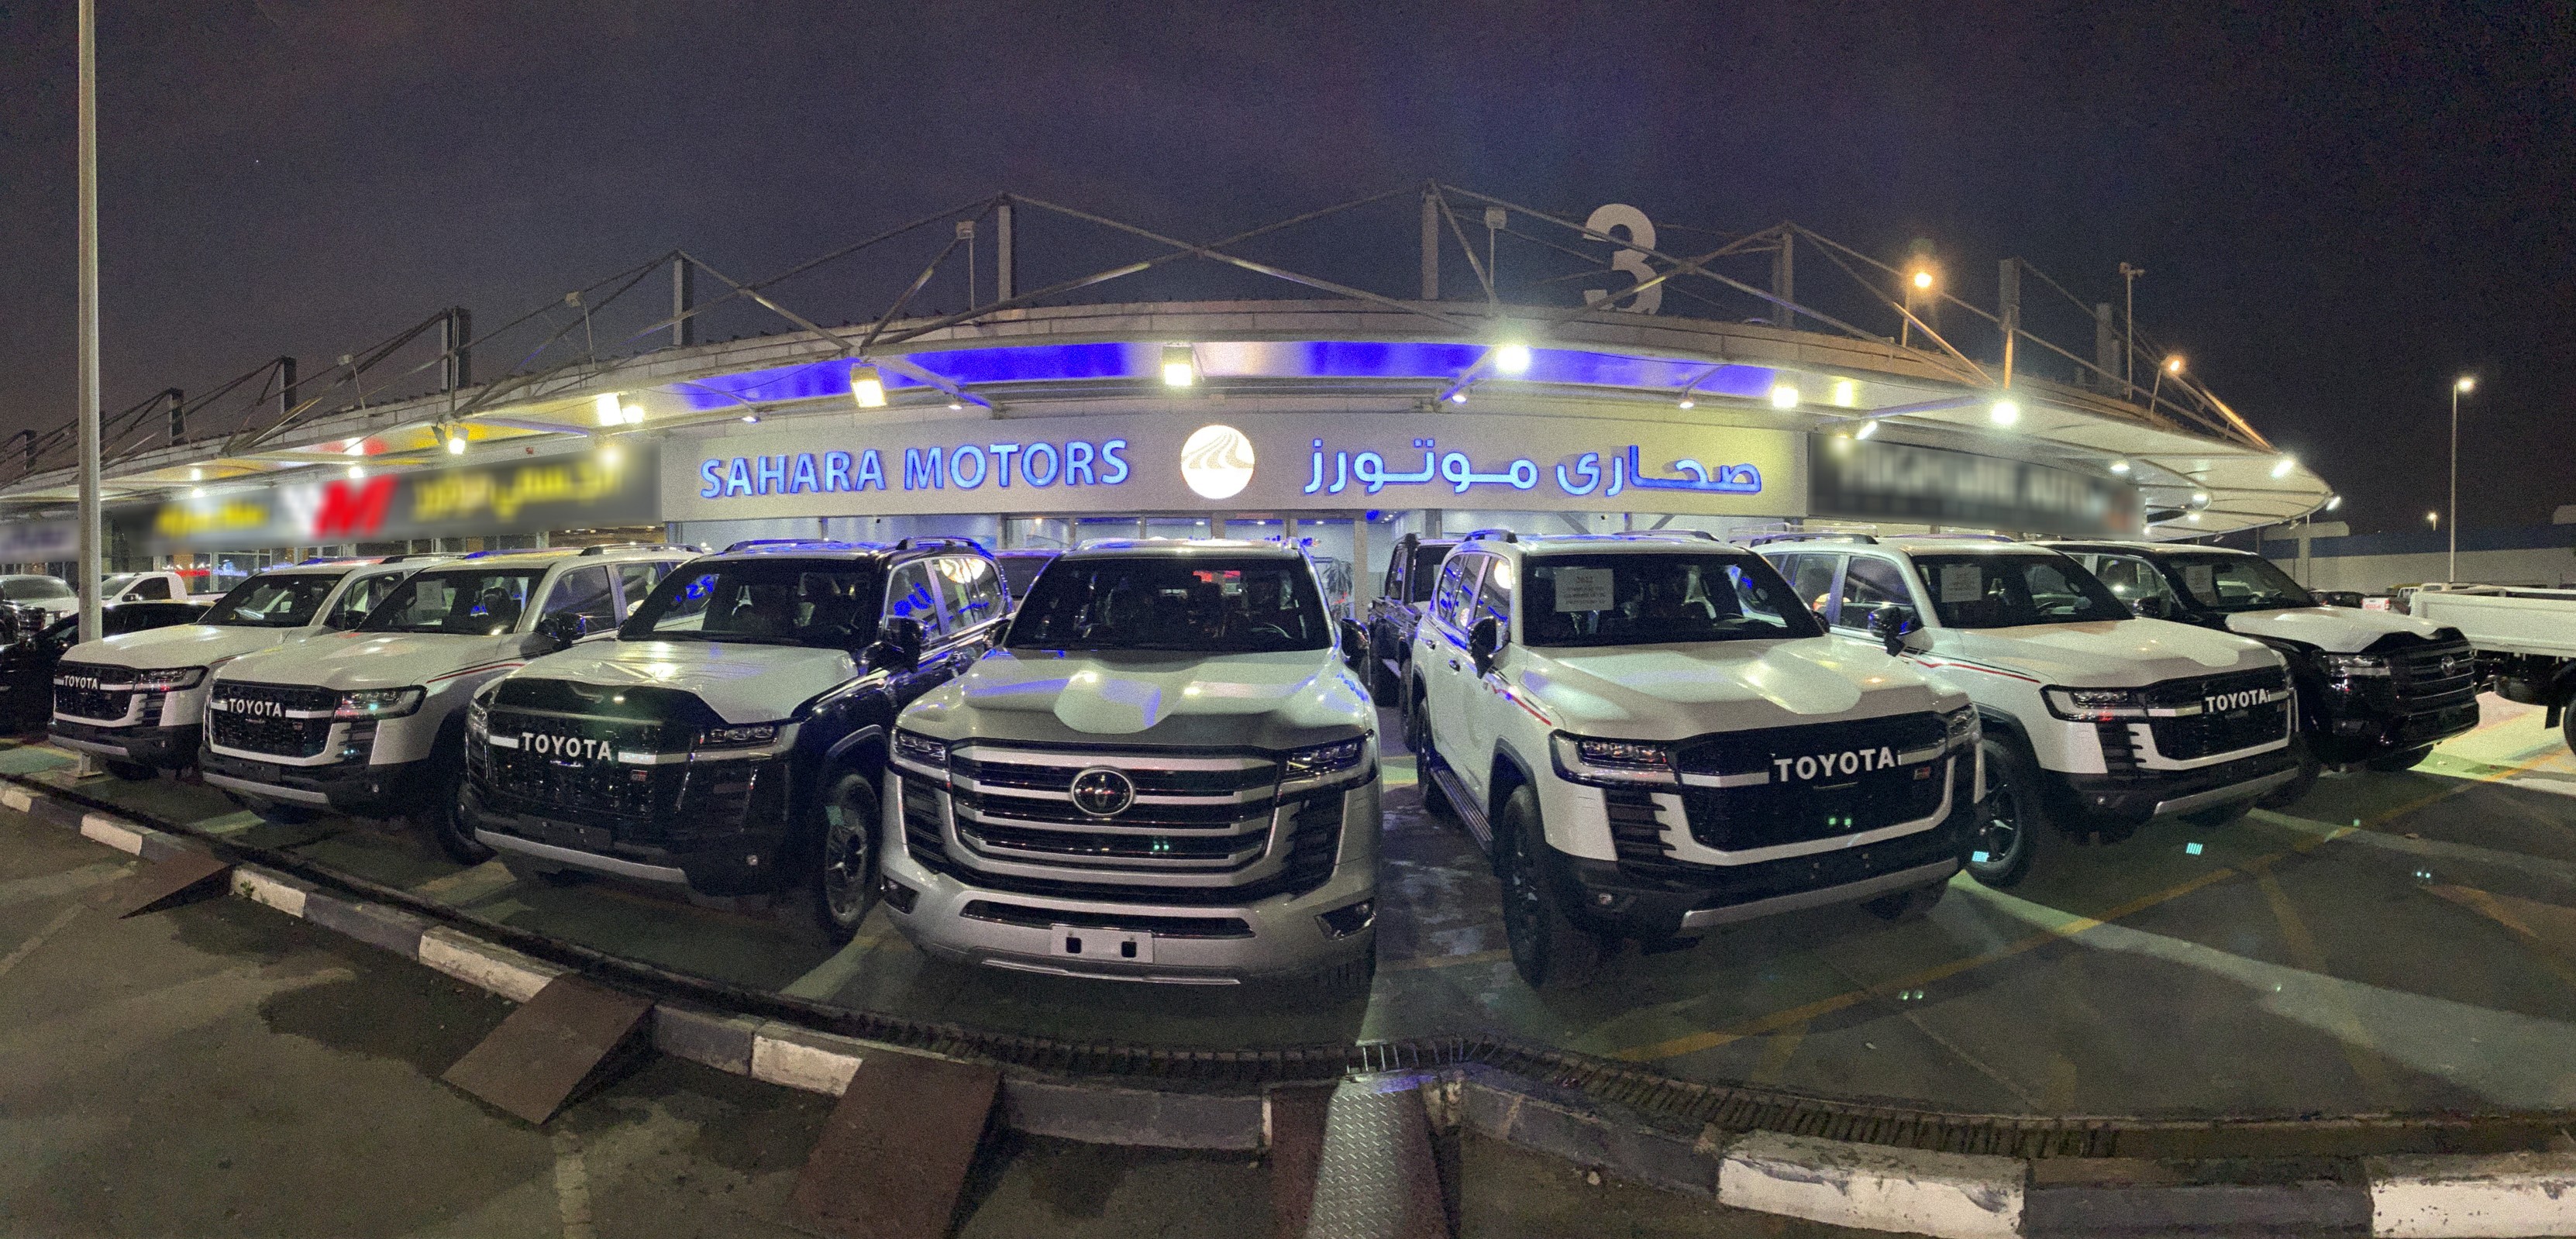 Sahara Motors Dubai